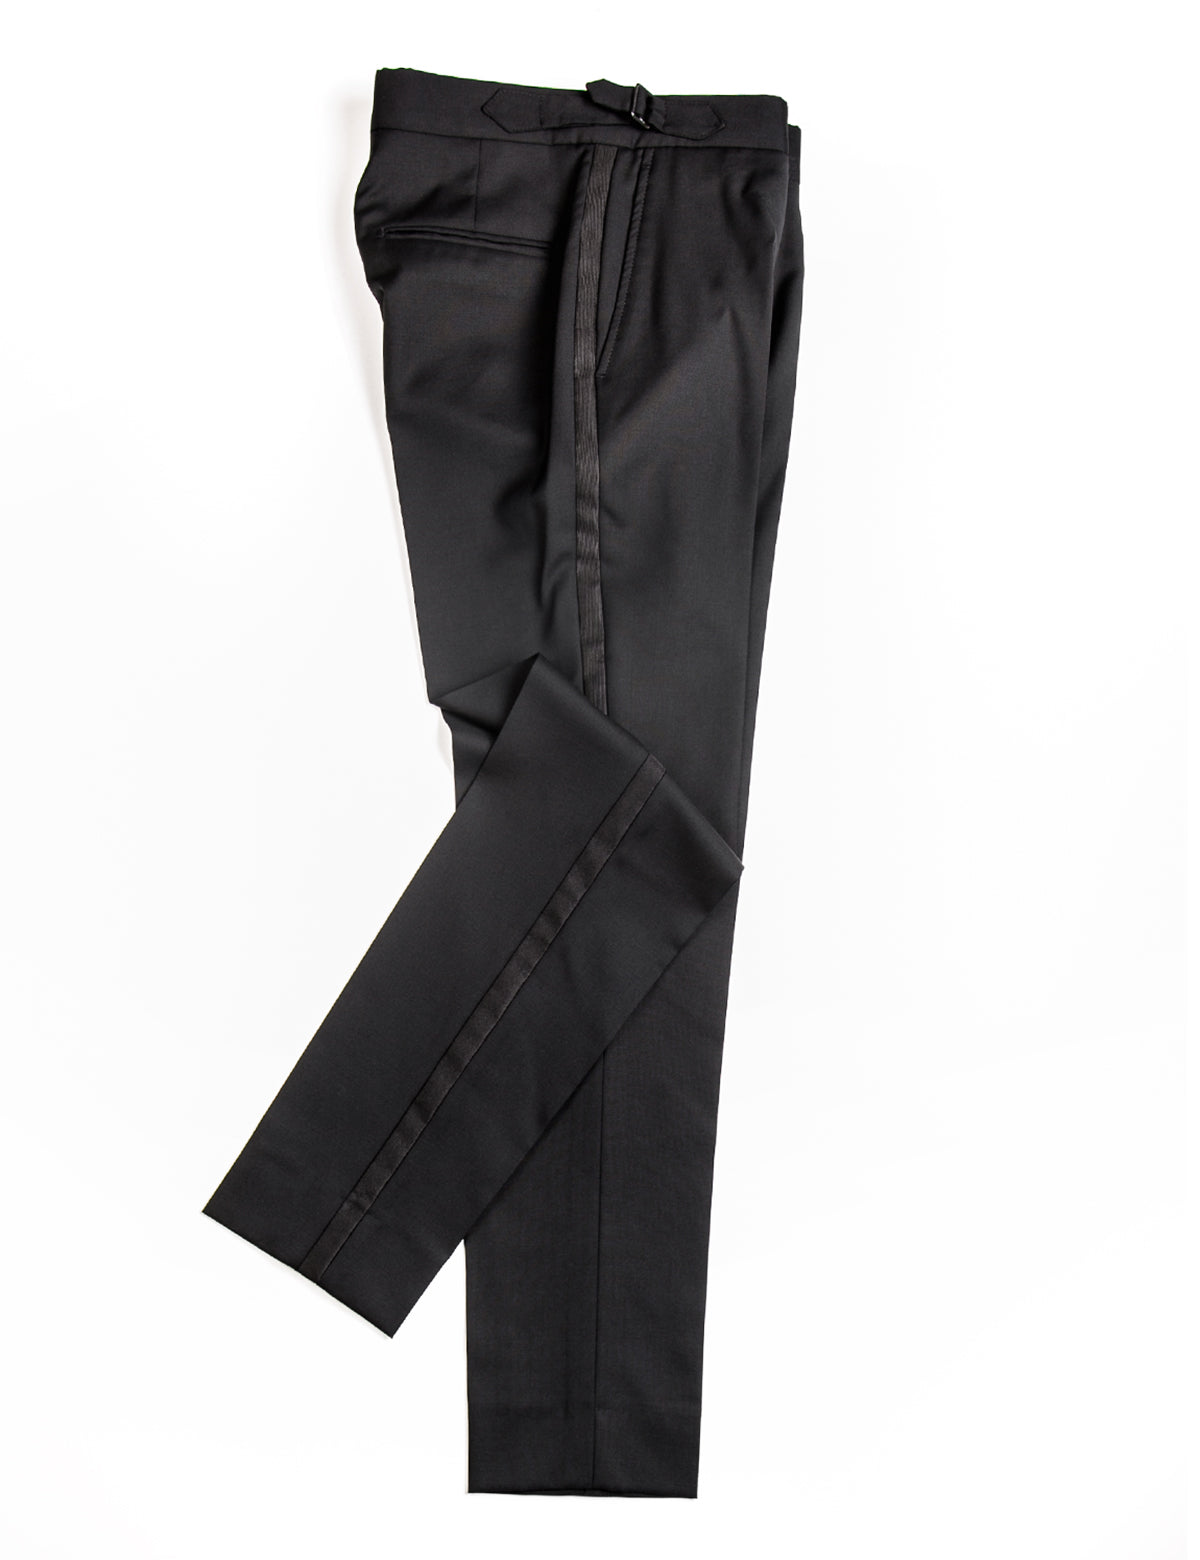 Brooklyn Tailors BKT50 Tuxedo Trouser in Super 110s - Black with Grosgrain Stripe folded flat shot